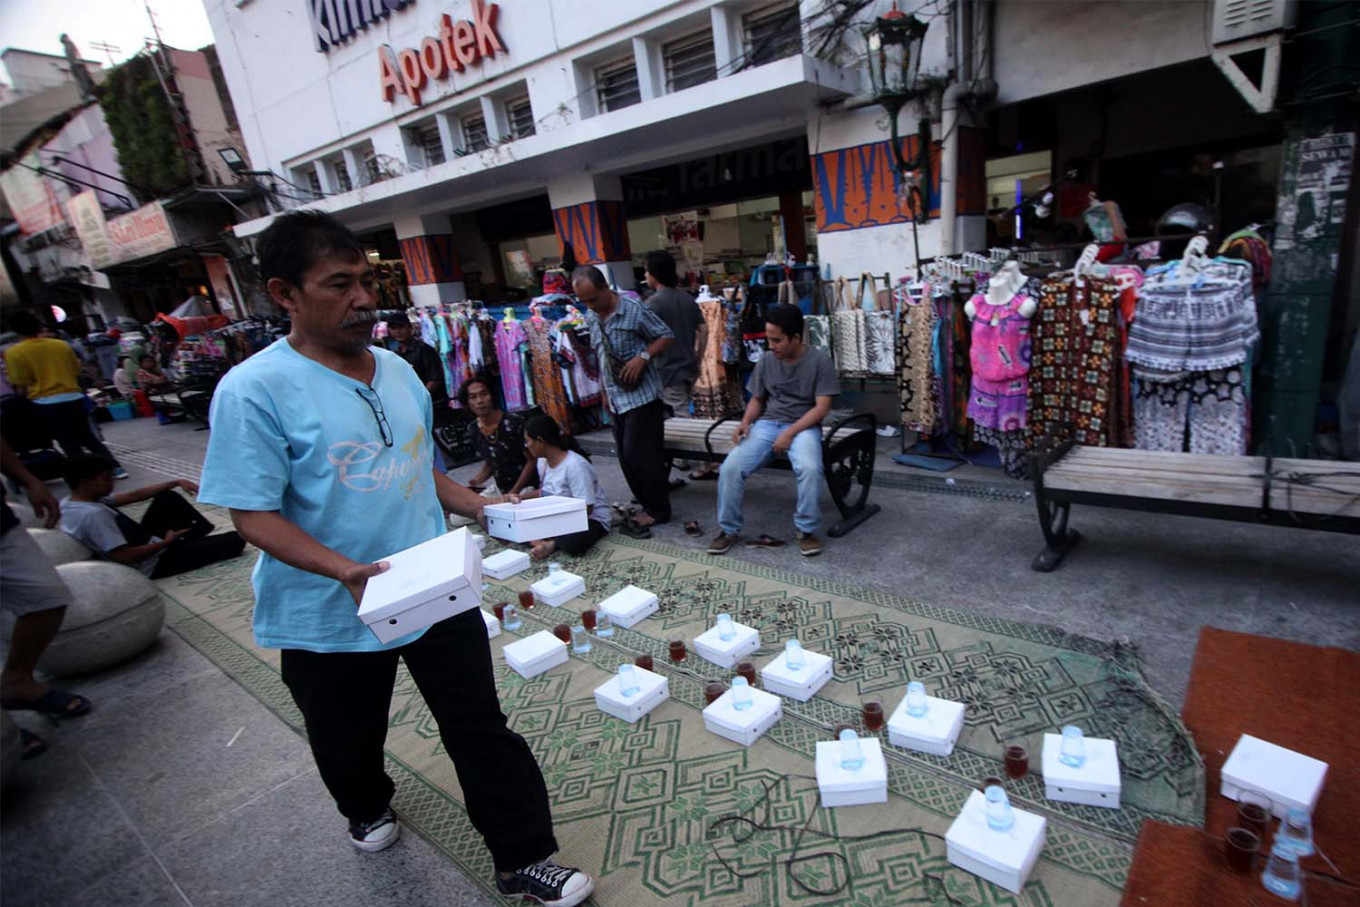 Kotak makan berisi nasi dan lauk pauk digelar di atas karpet | Foto: Boy T. Harjanto / Jakarta Post